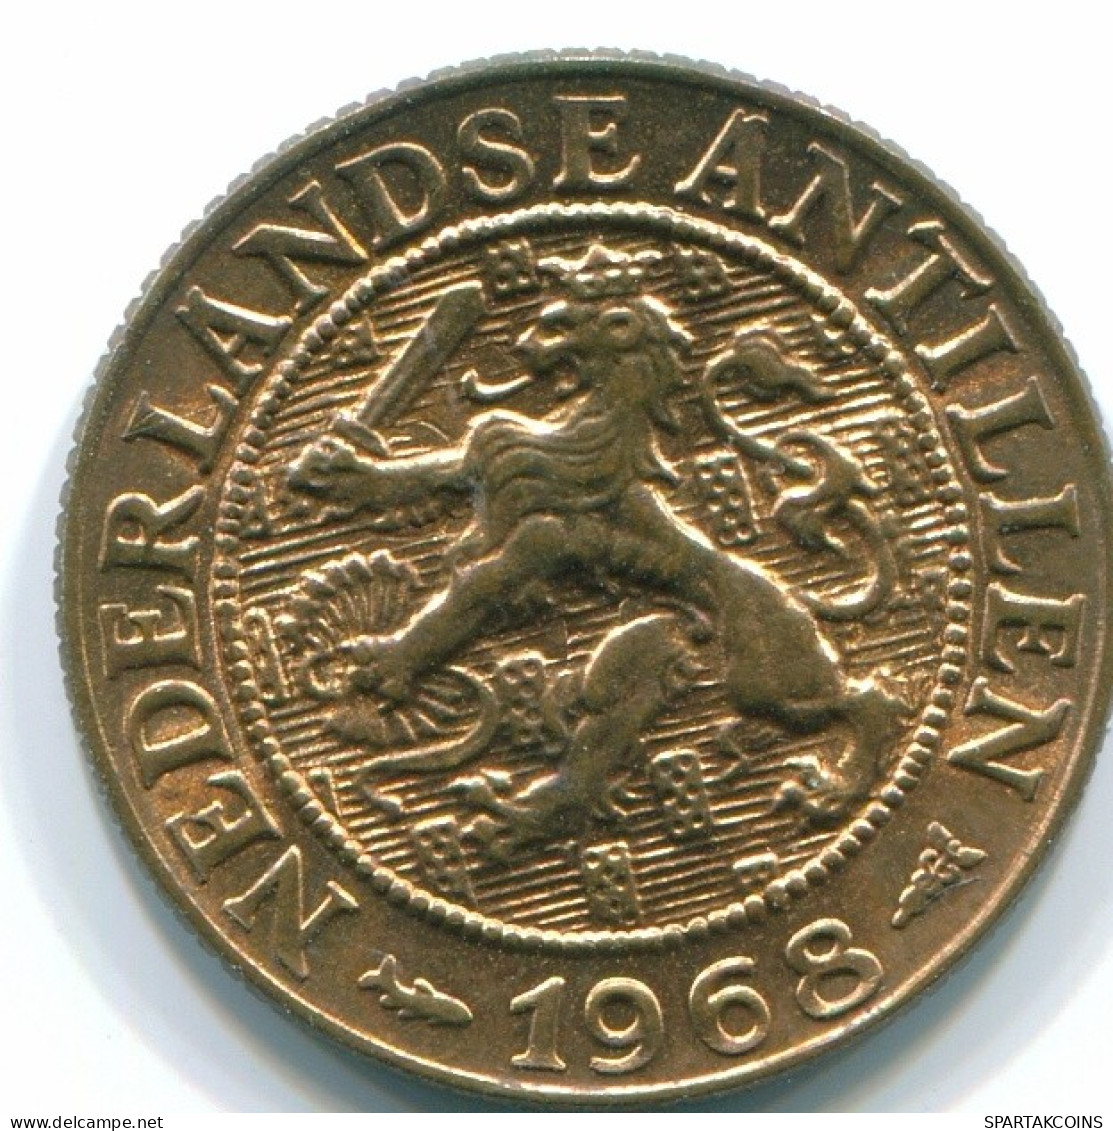 1 CENT 1968 NETHERLANDS ANTILLES Bronze Fish Colonial Coin #S10800.U.A - Niederländische Antillen